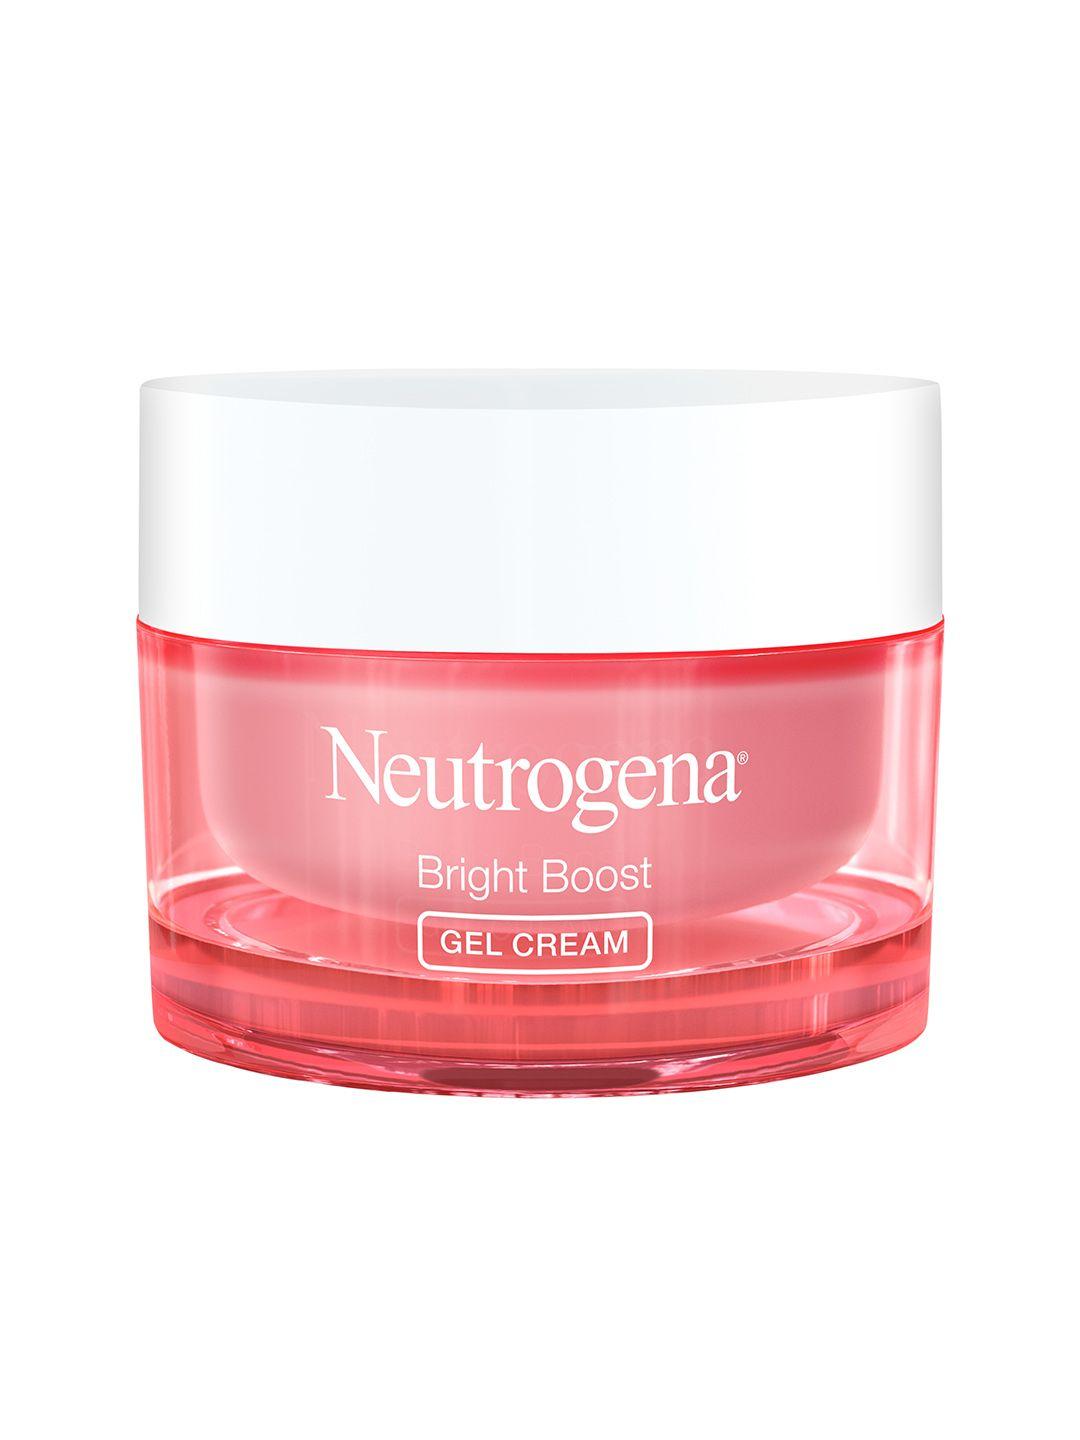 neutrogena bright boost gel cream - 50g